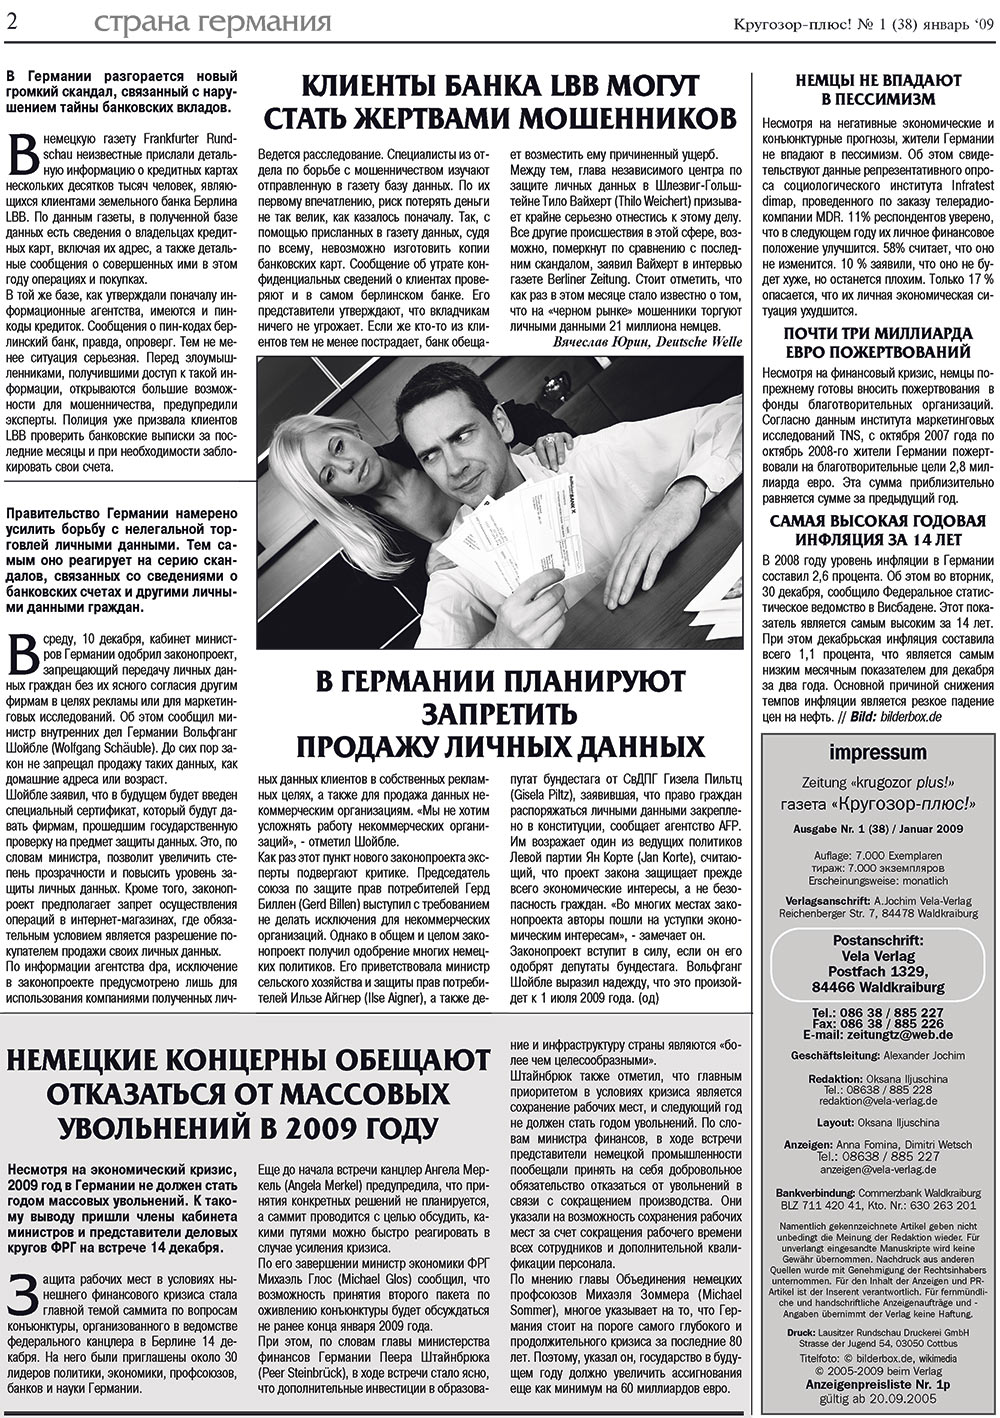 Кругозор плюс! (газета). 2009 год, номер 1, стр. 2